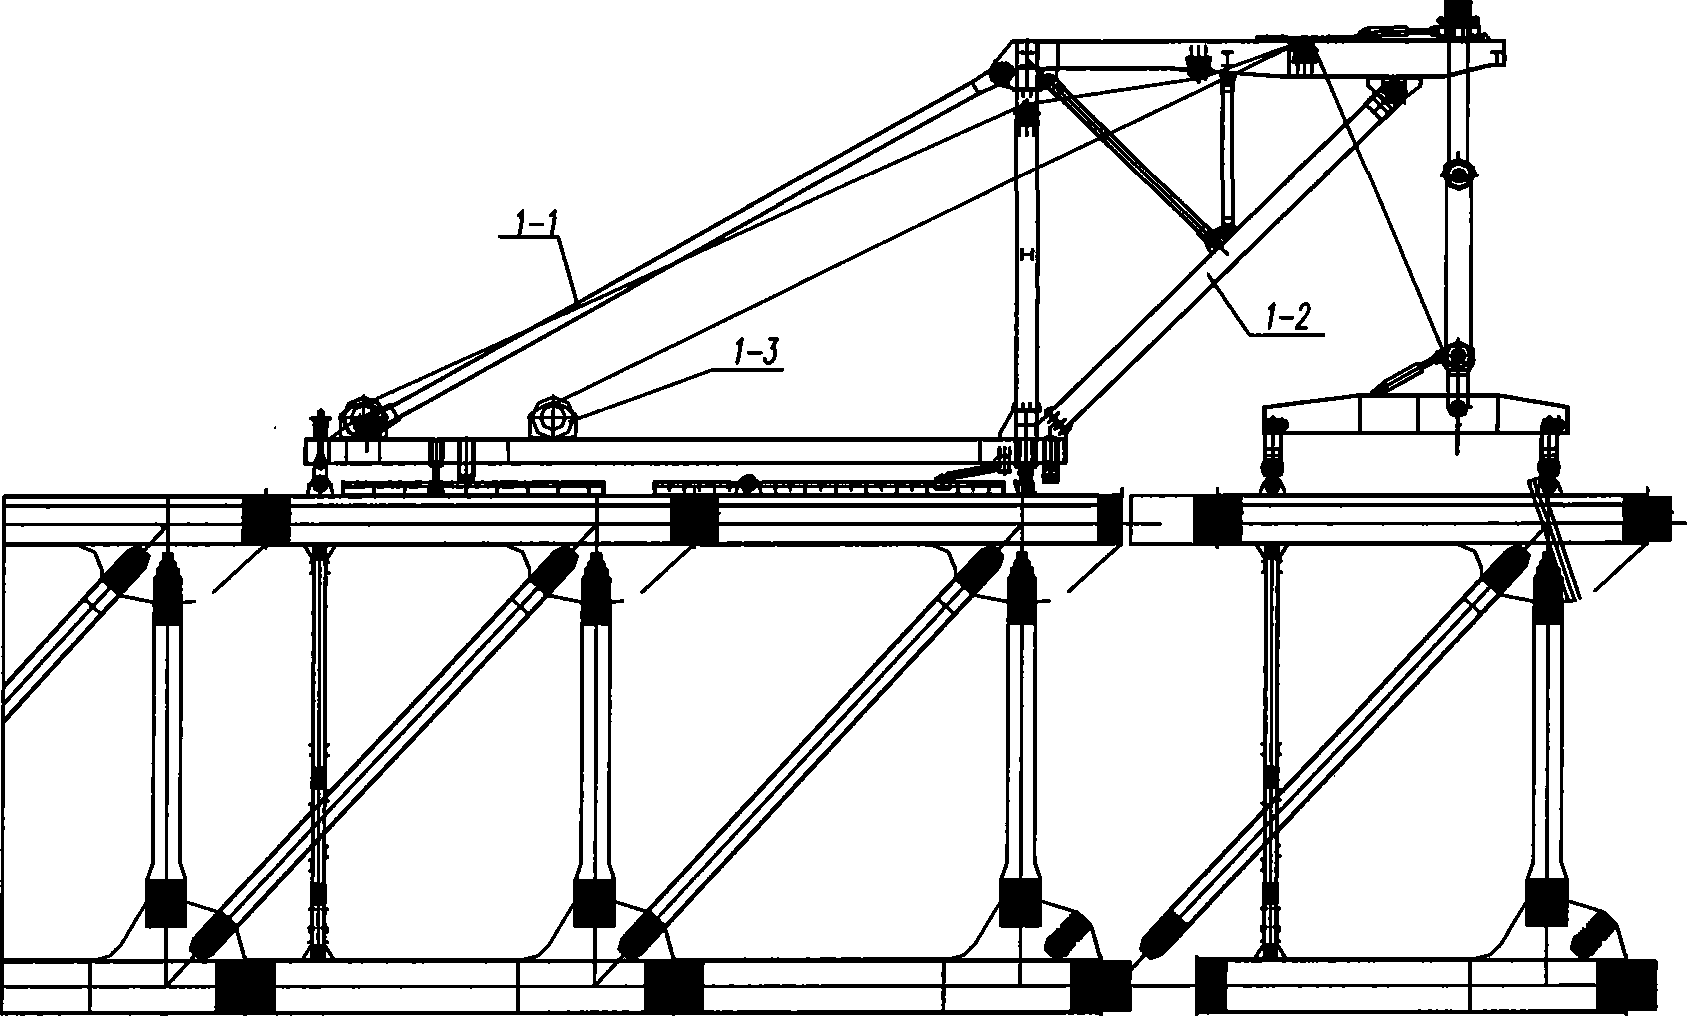 Girderr crane using three-point statically indeterminate hoisting system